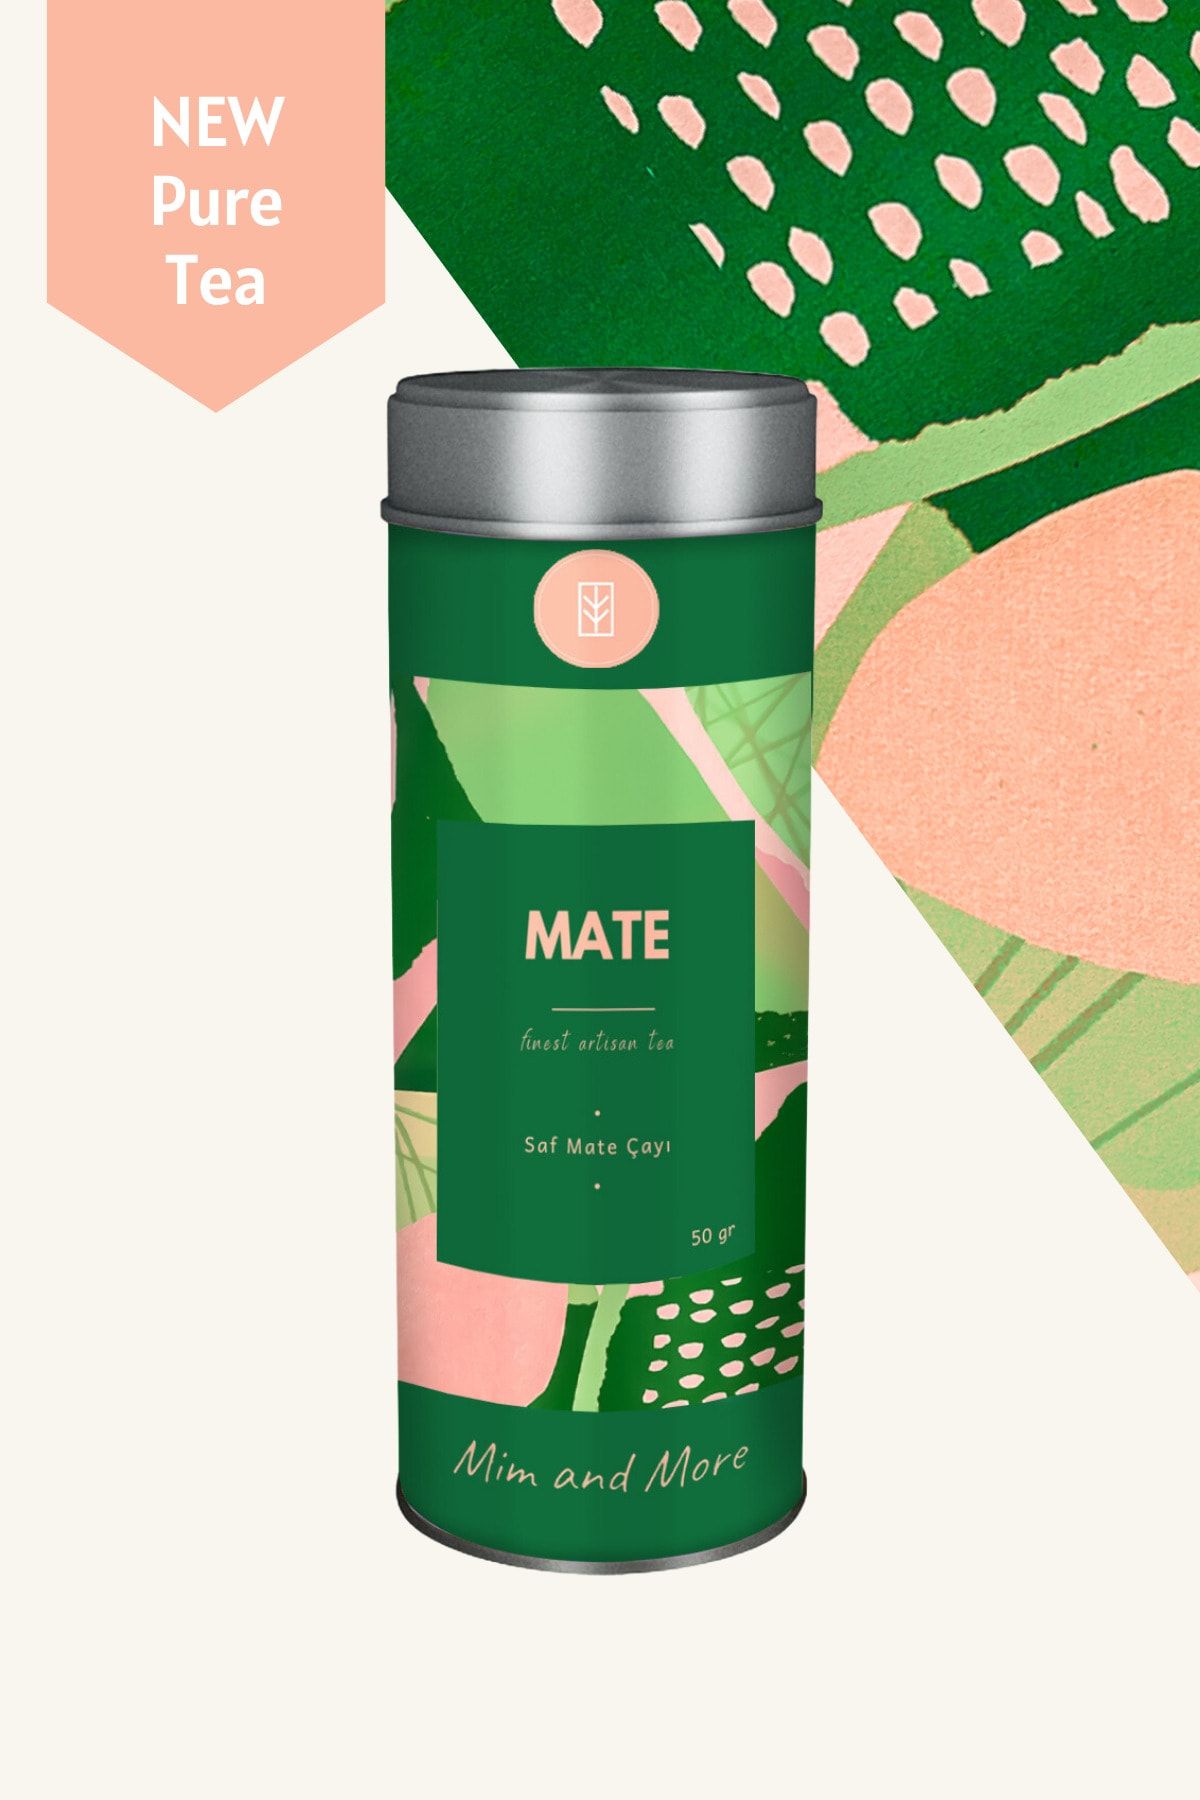 Mim and More Mate Tea - Mate Çayı